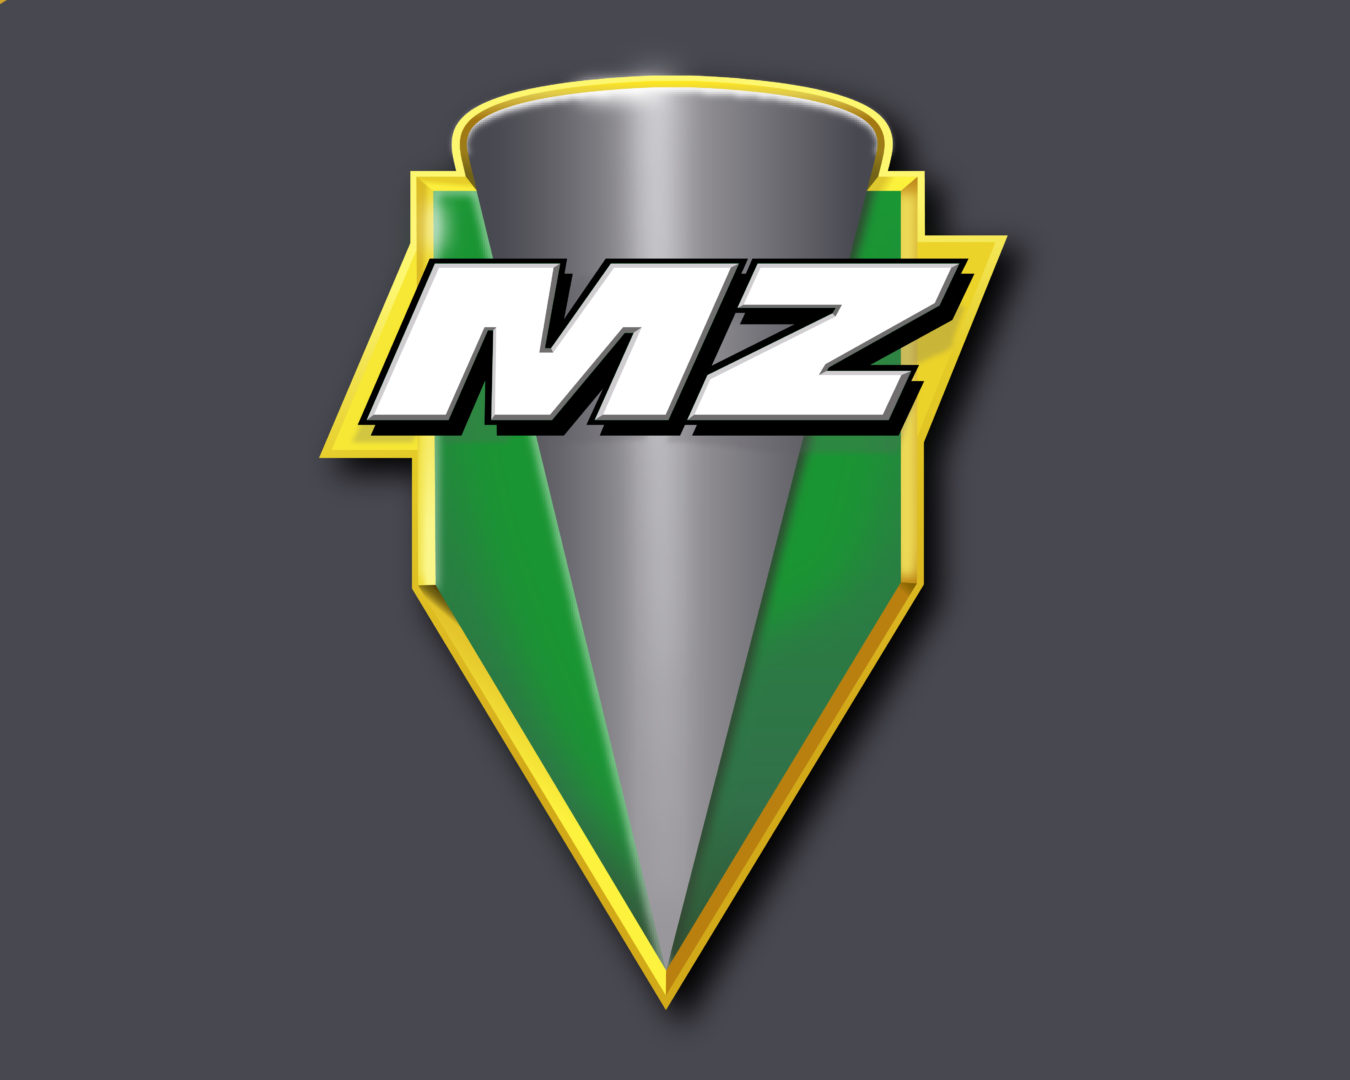 MZ Motorrad logo motorcycle